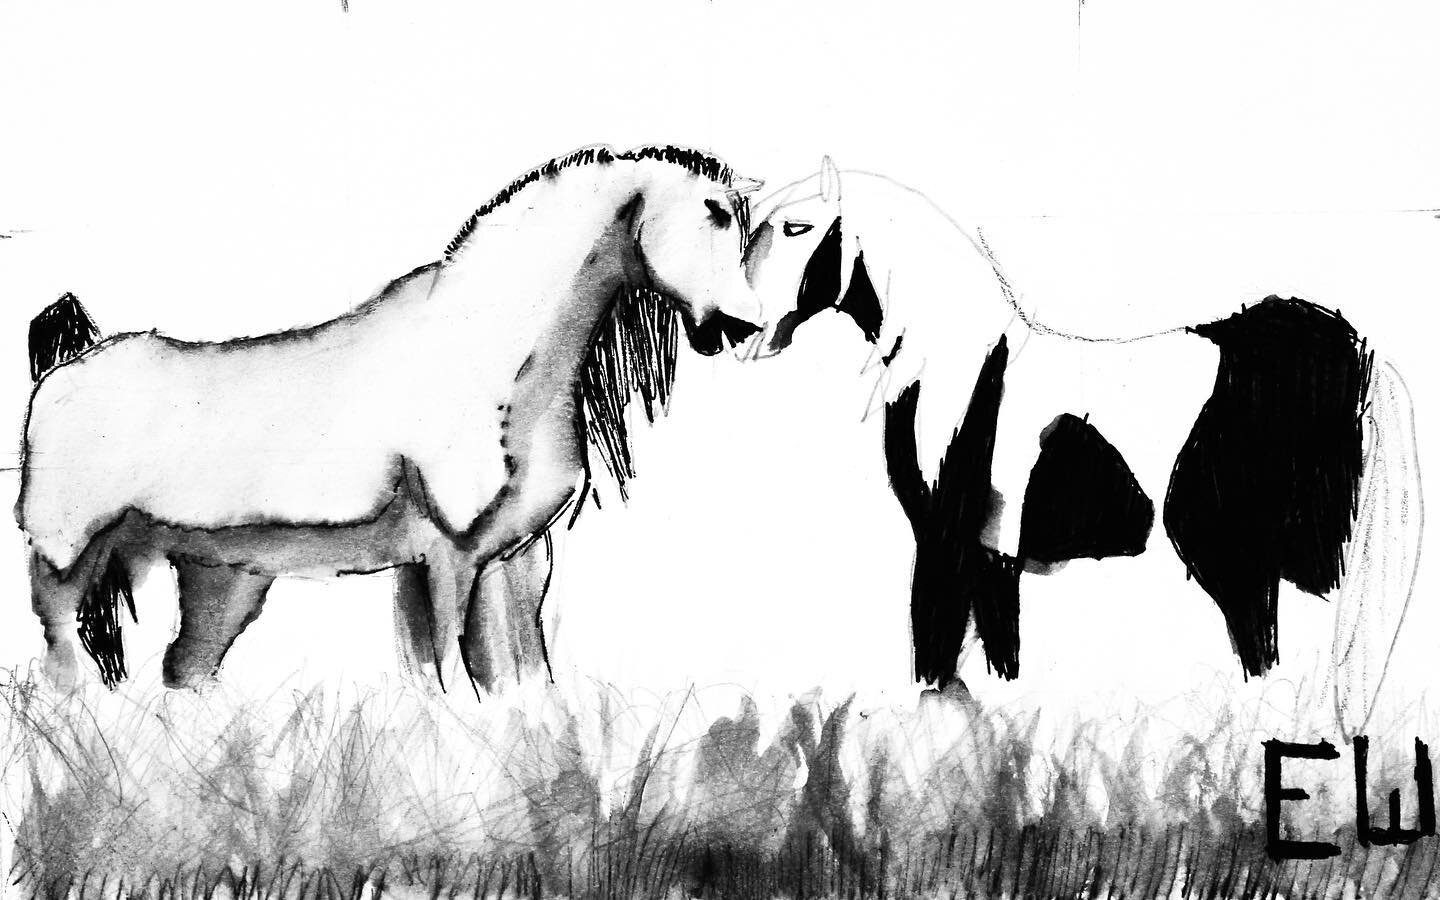 &ldquo;Spirit&rdquo; Pen Drawing
Artist: Emma Williams, age 11
.
.
.
#pen #pendrawing #drawing #penandink #penandinkdrawing #instaart #art #artclass #artstudent #utahart #utahartist #sydneybowmanartclass
#spitit #horses #horse